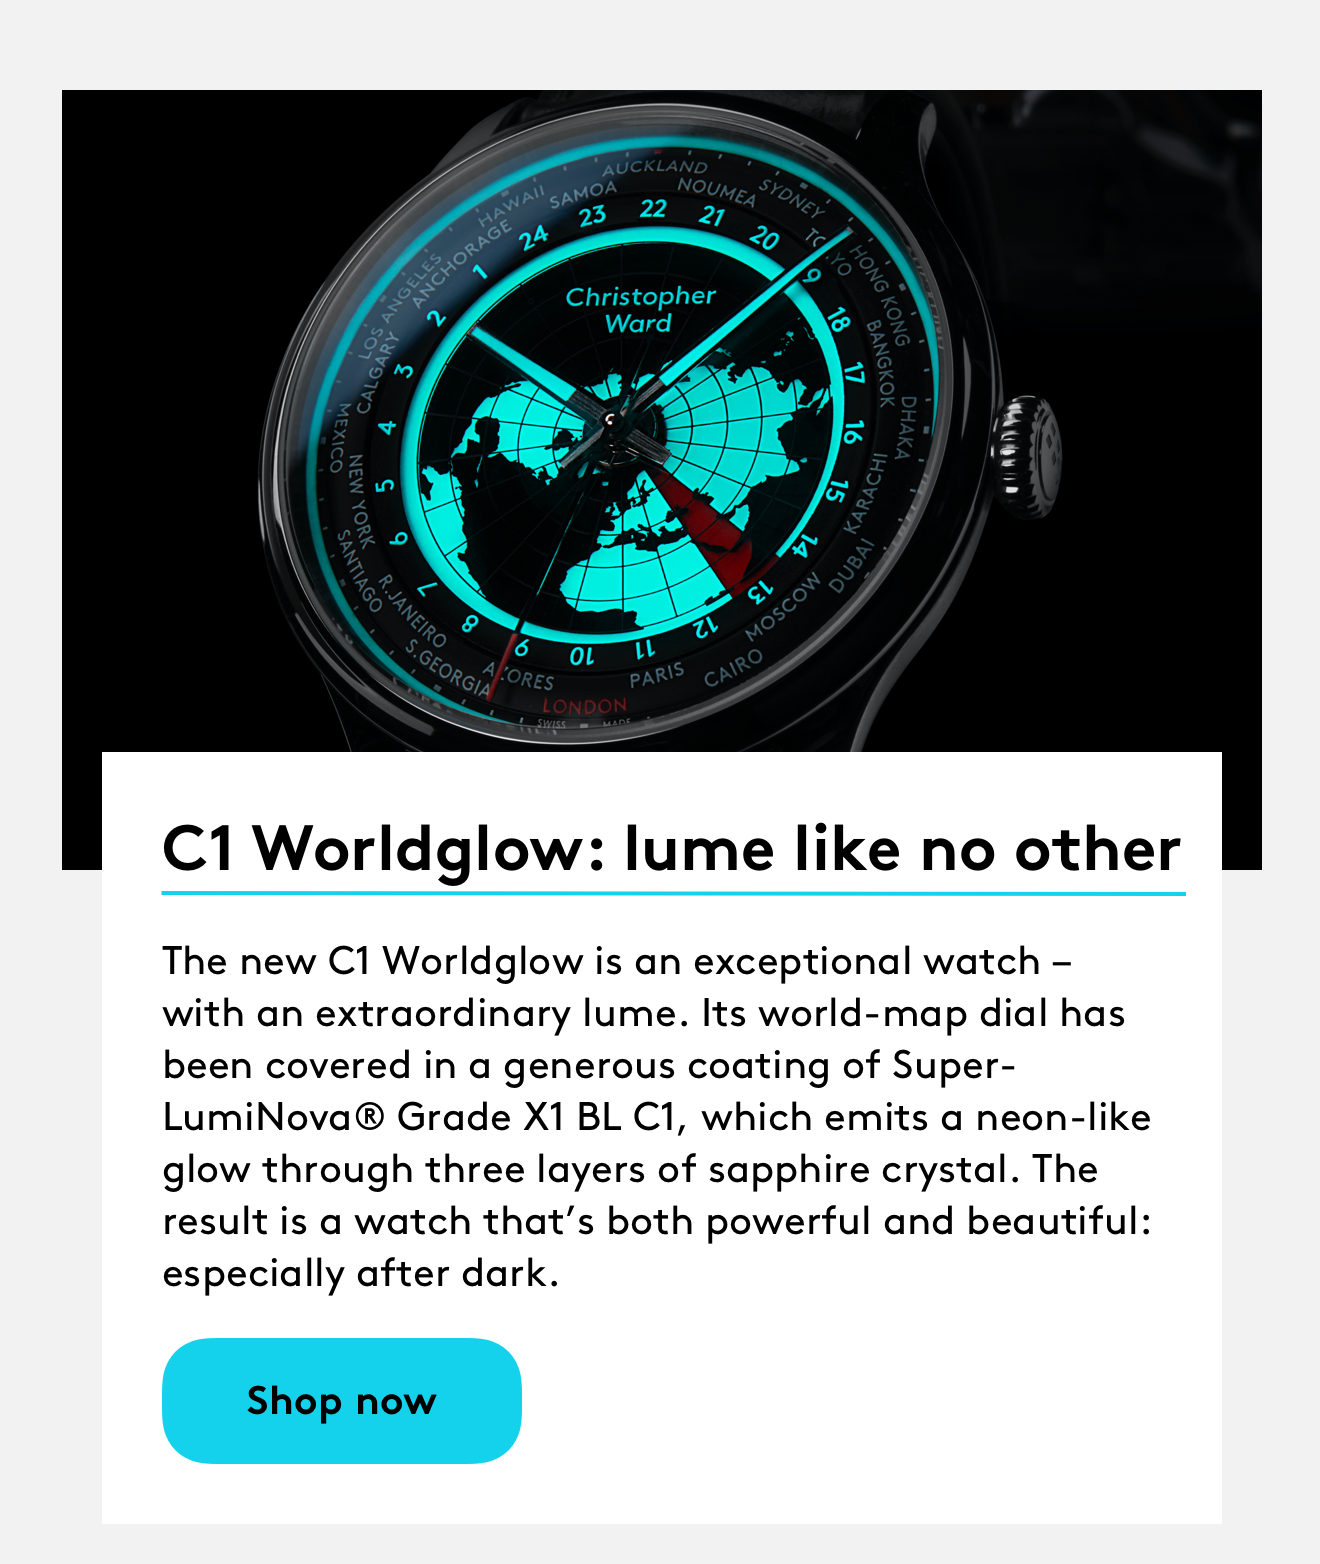 C1 Worldglow: lume like no other